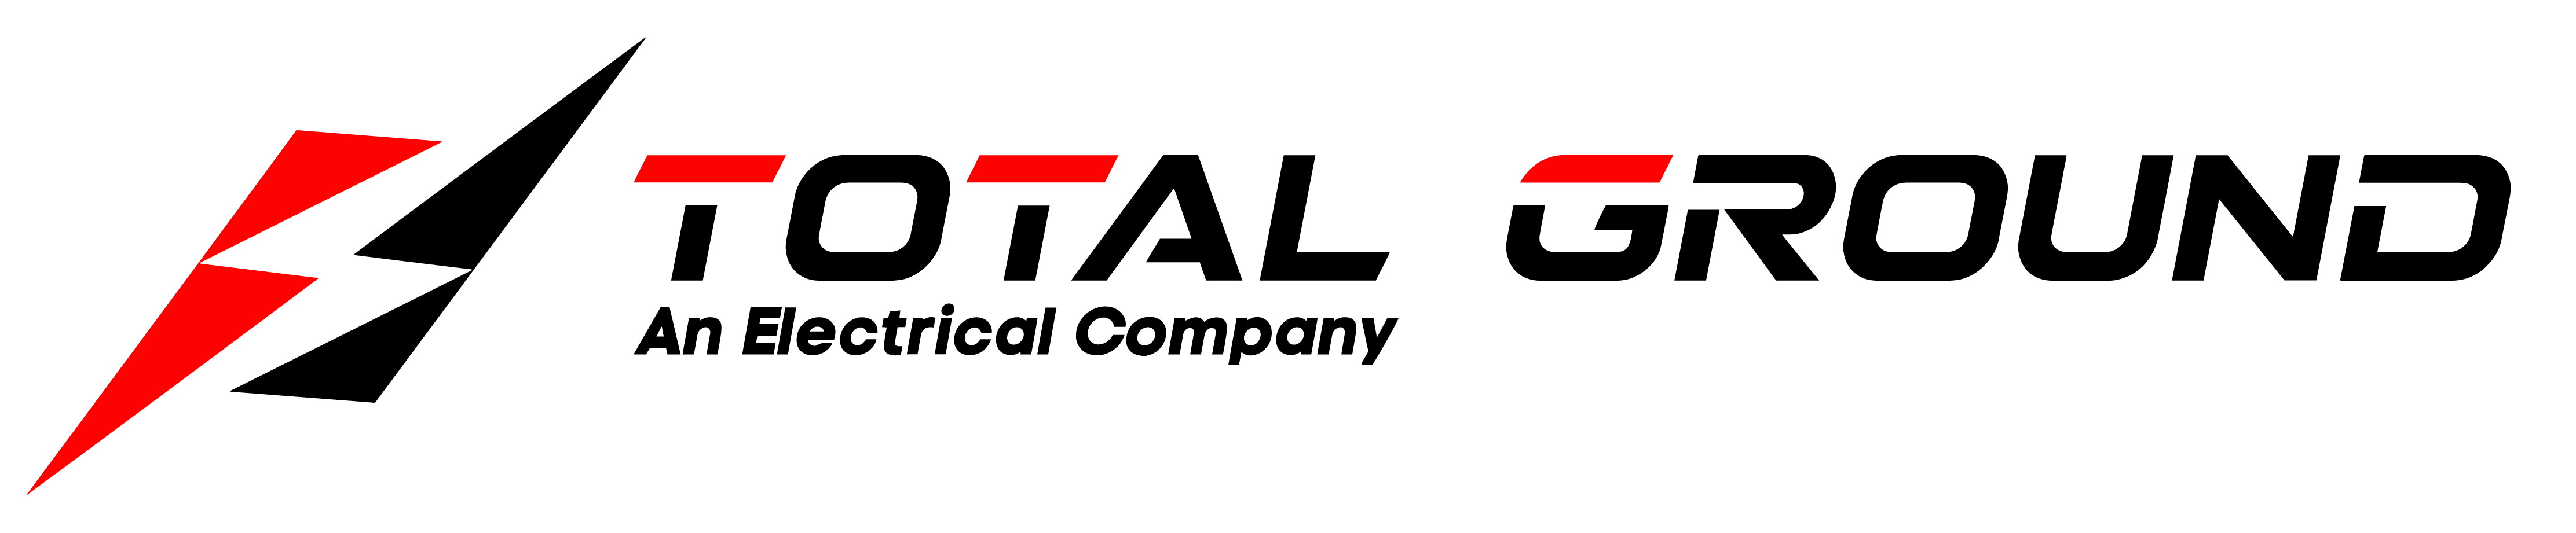 Total-Ground-Logo-01